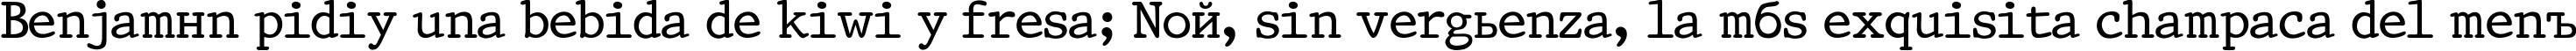 Пример написания шрифтом Prestige-Normal текста на испанском